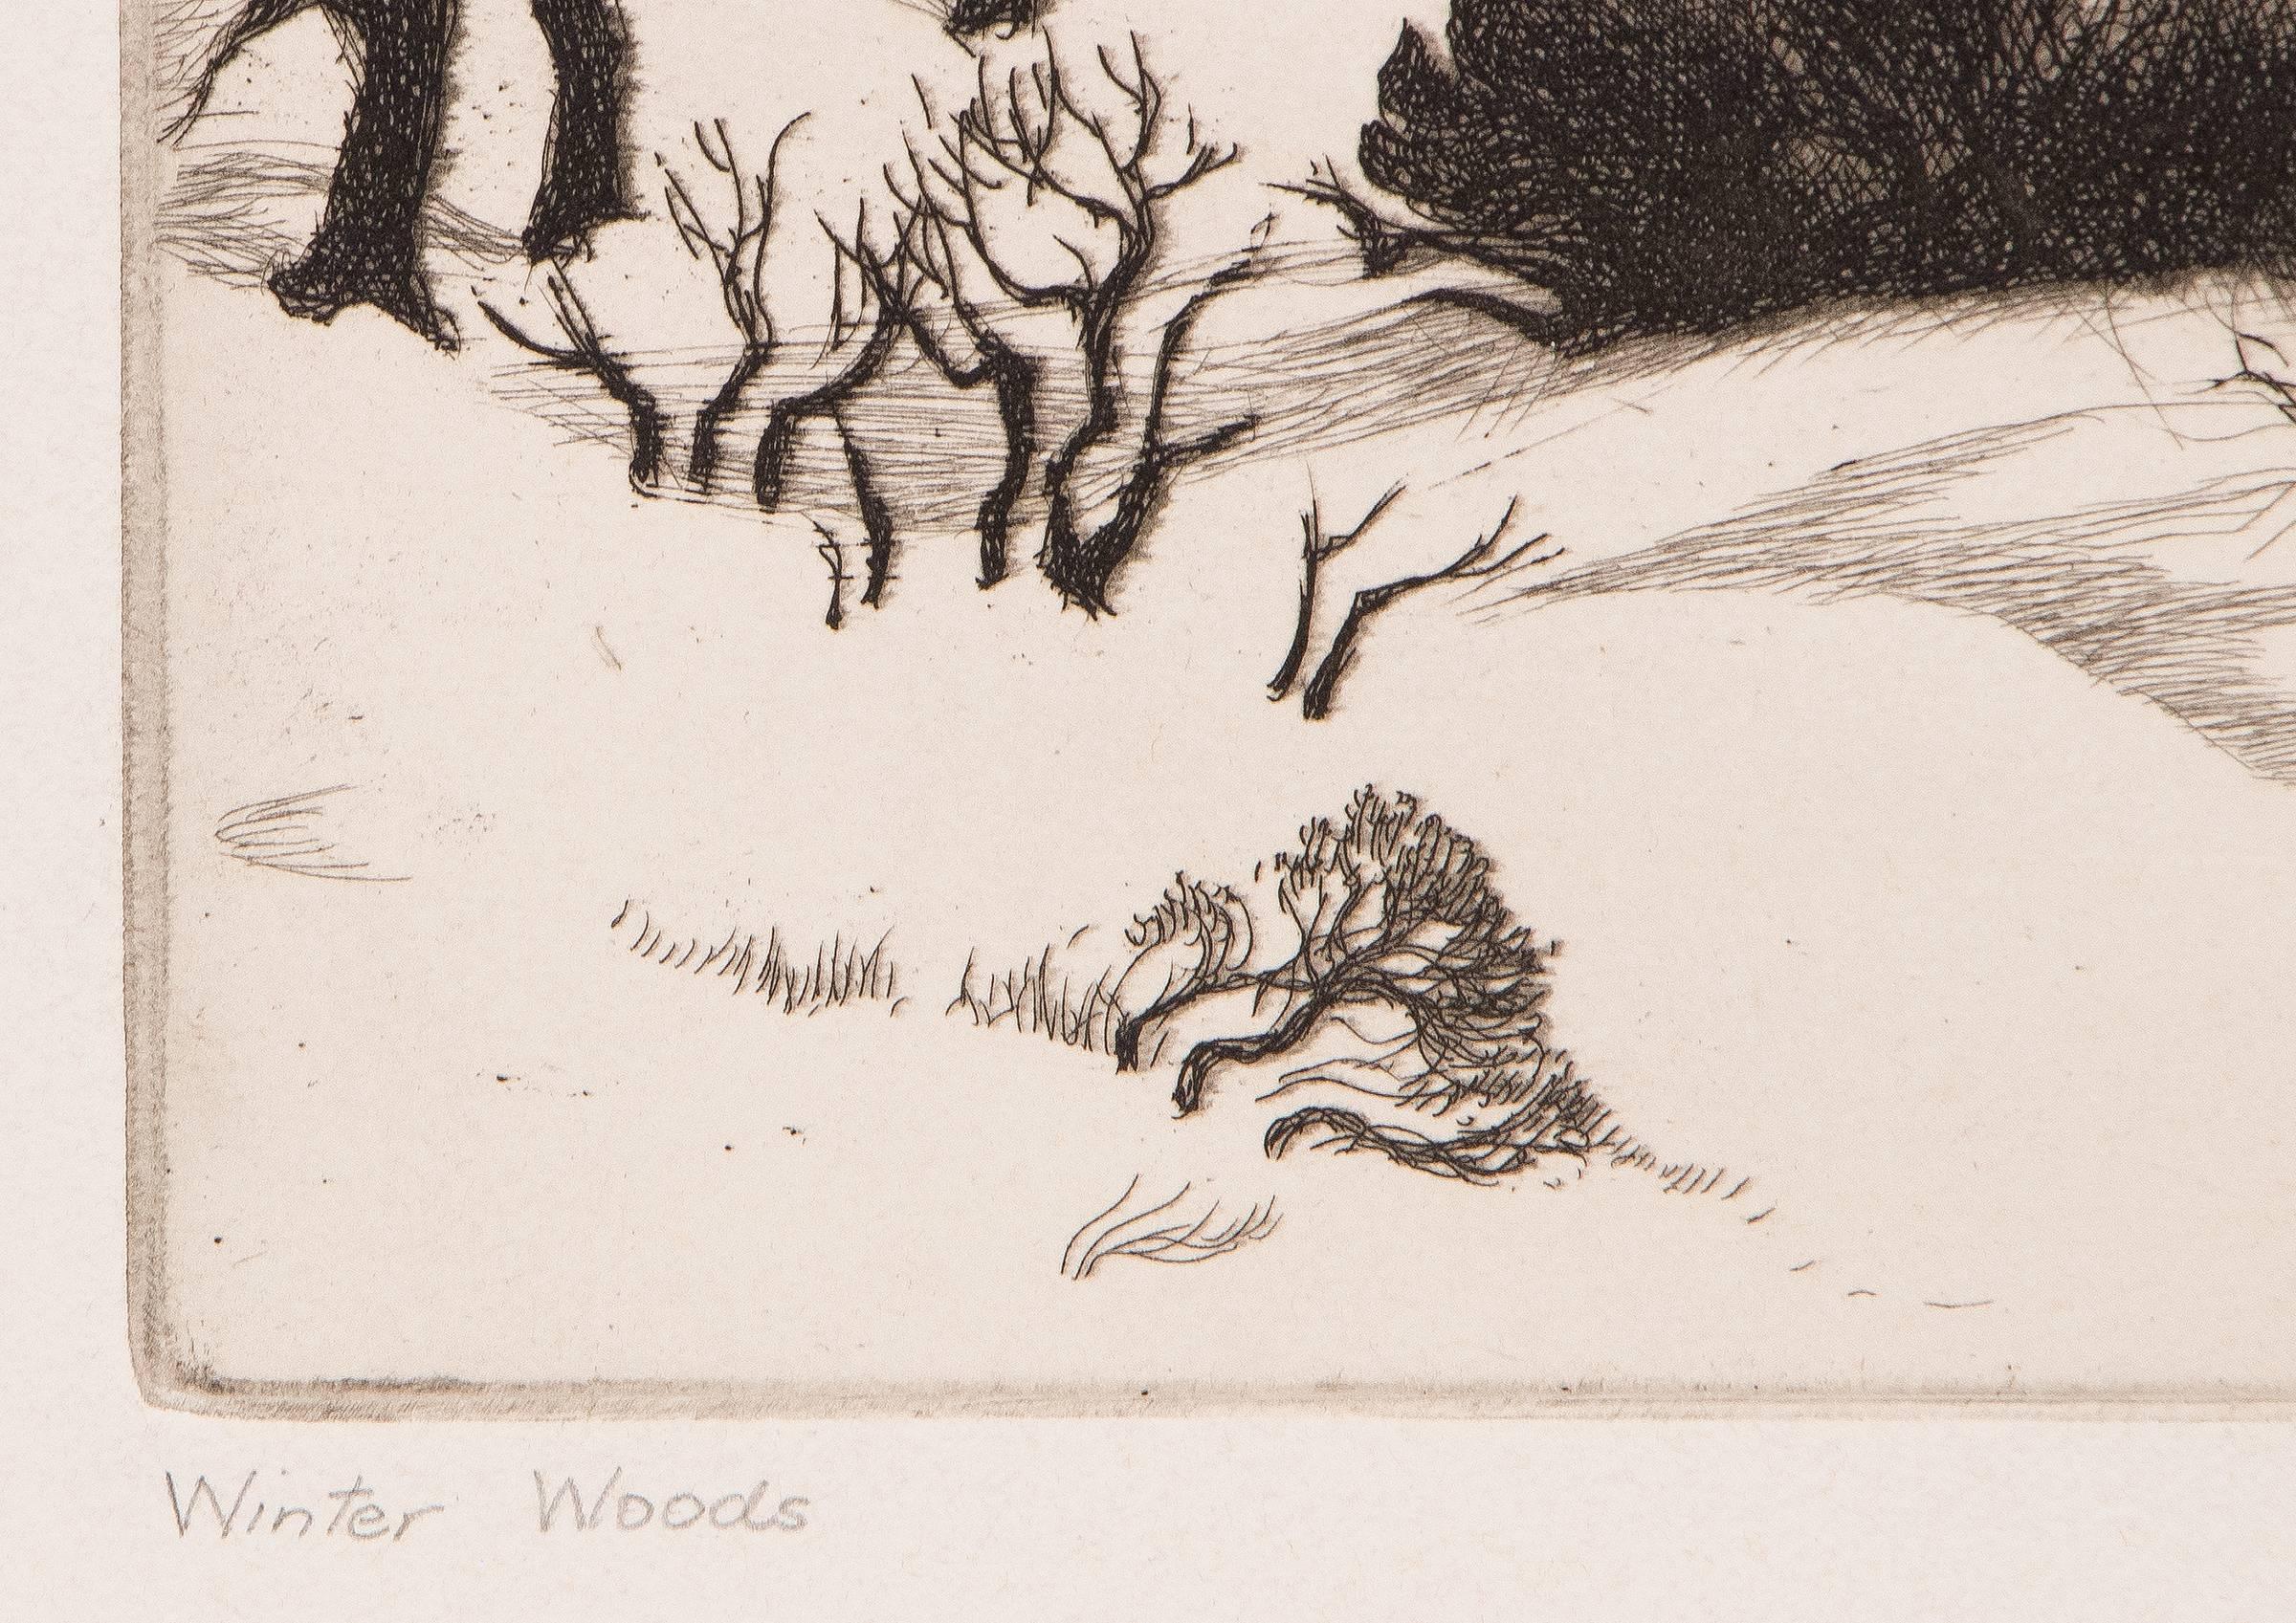 Winter Woods - Print by Gene Kloss